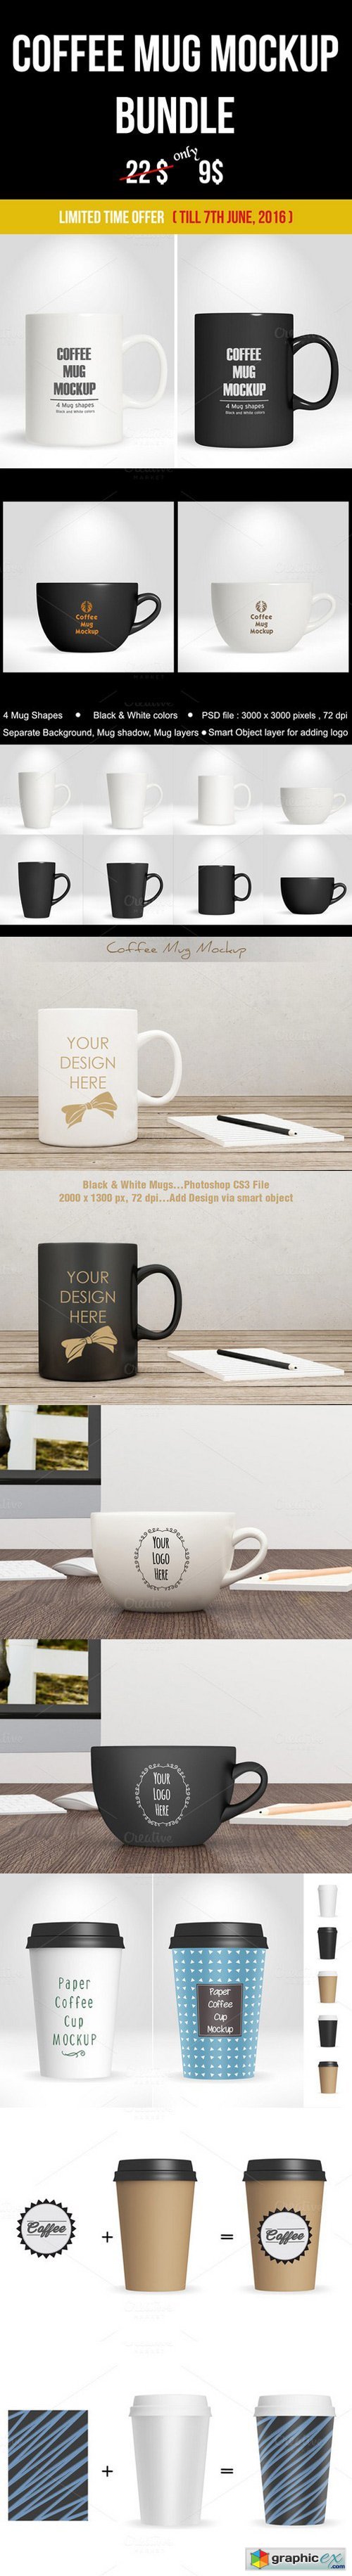 Coffee mug mockup bundle